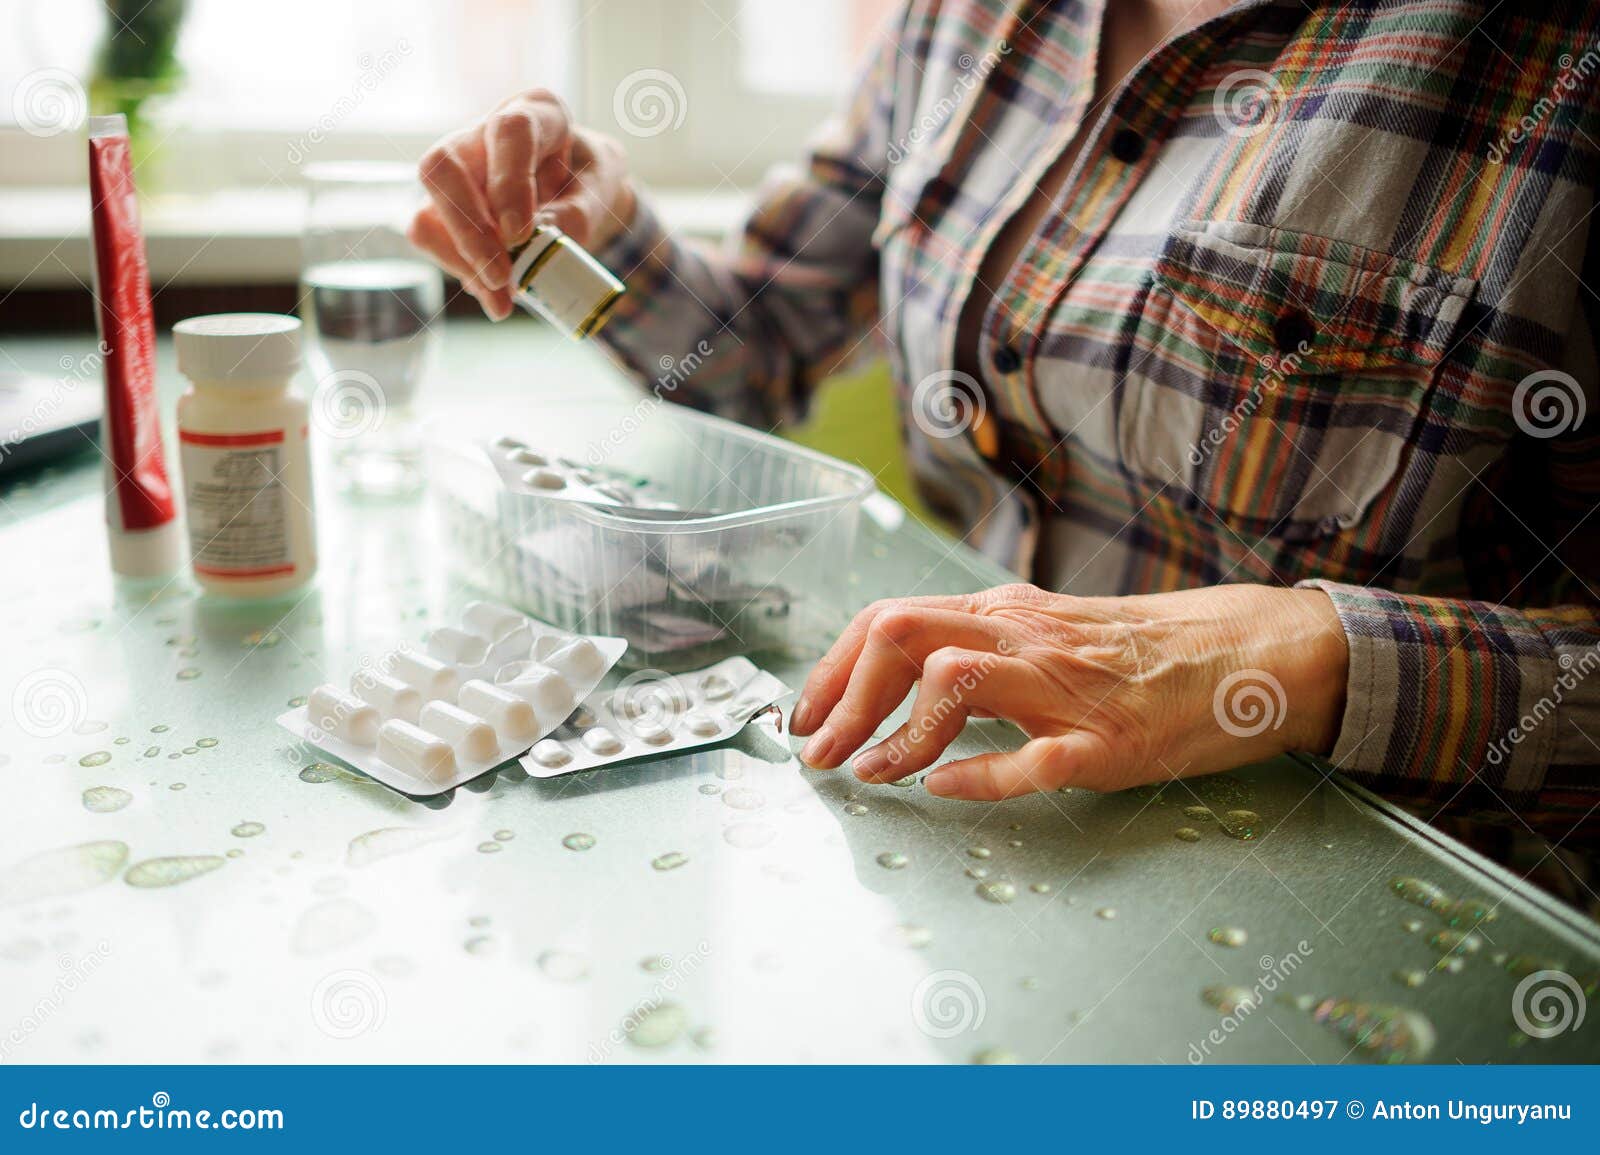 the woman having rheumatoid arthritis takes medicine.